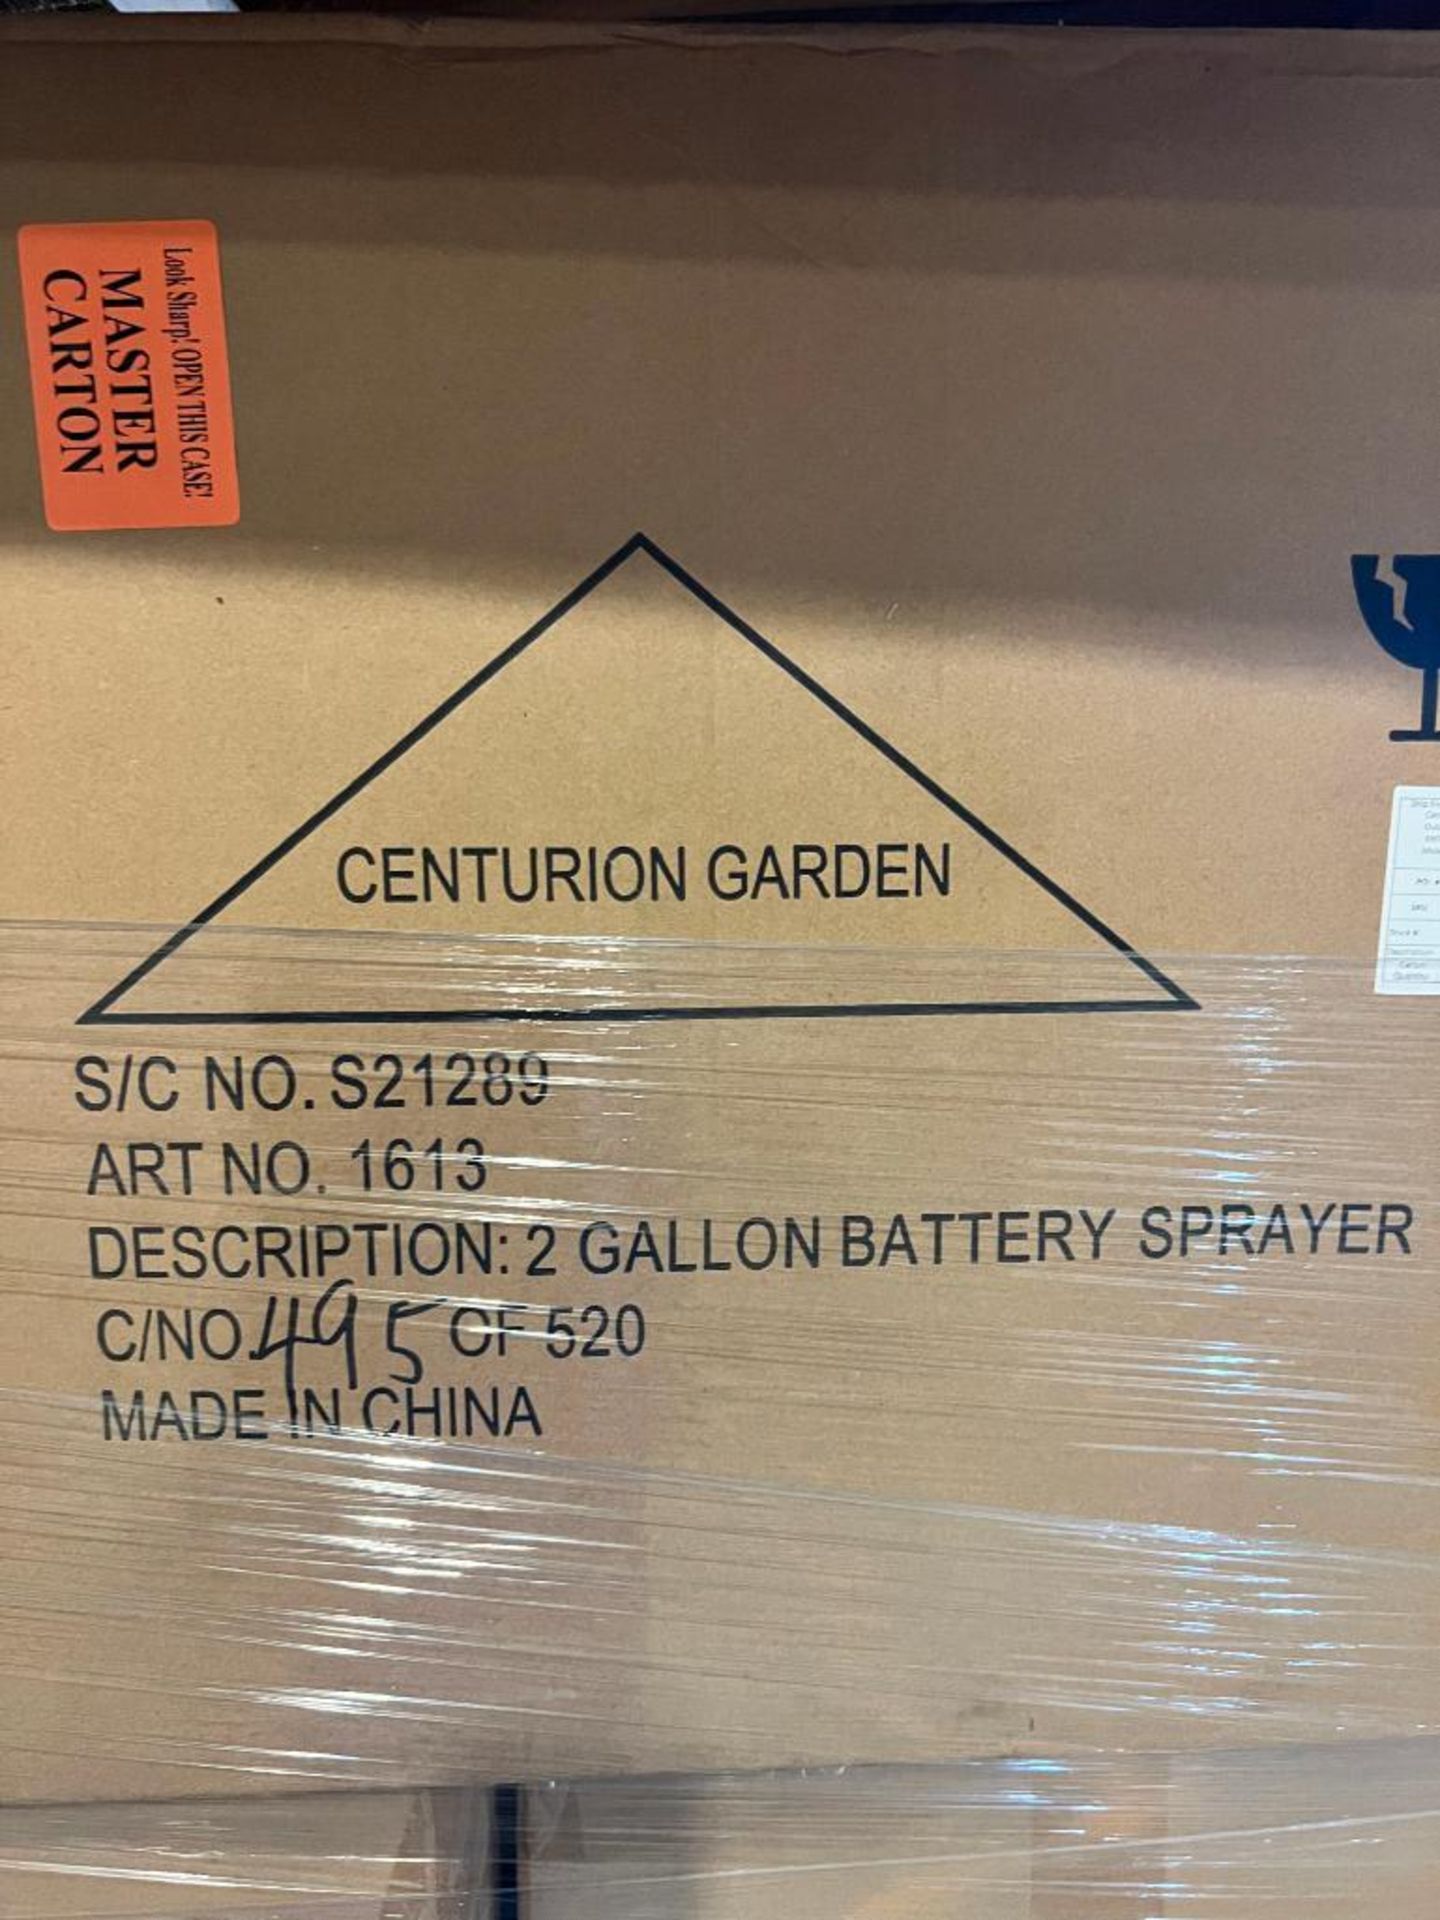 (22) Skids of Centurion Garden 2-Gallon Battery Sprayers & Farm Innovators Heated Pans - Image 3 of 3